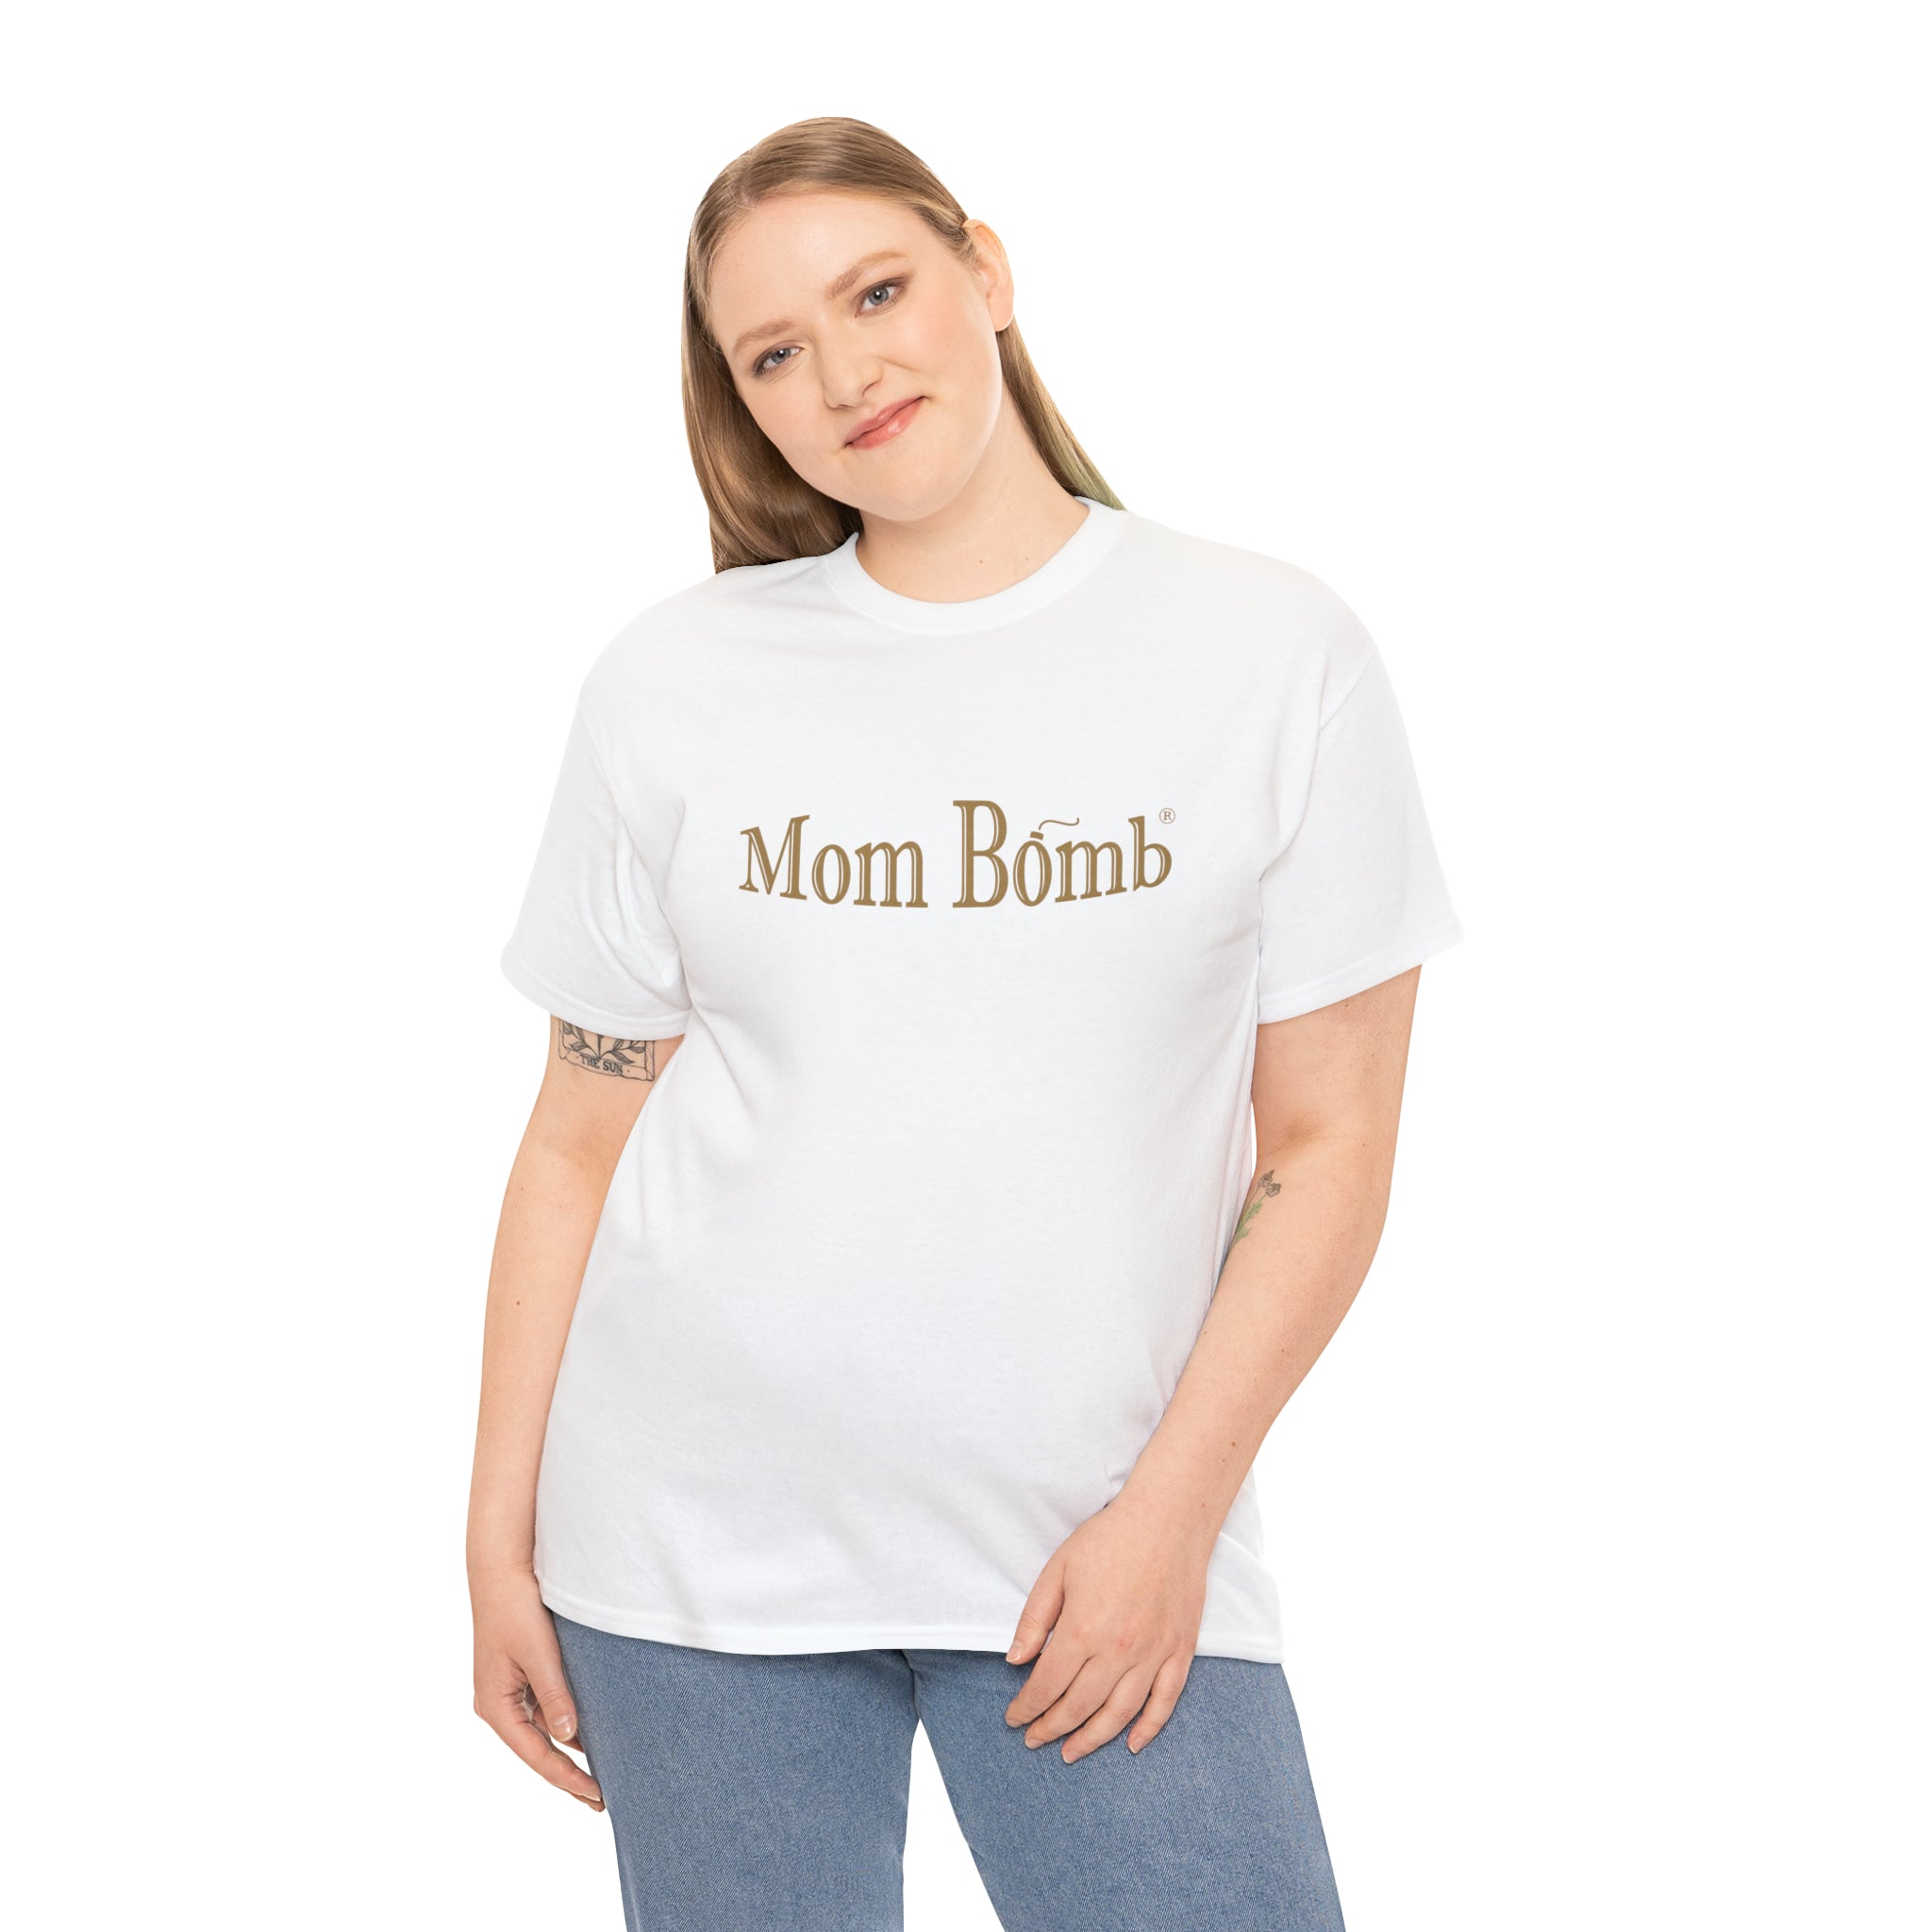 The Mom Bomb Cotton Tee